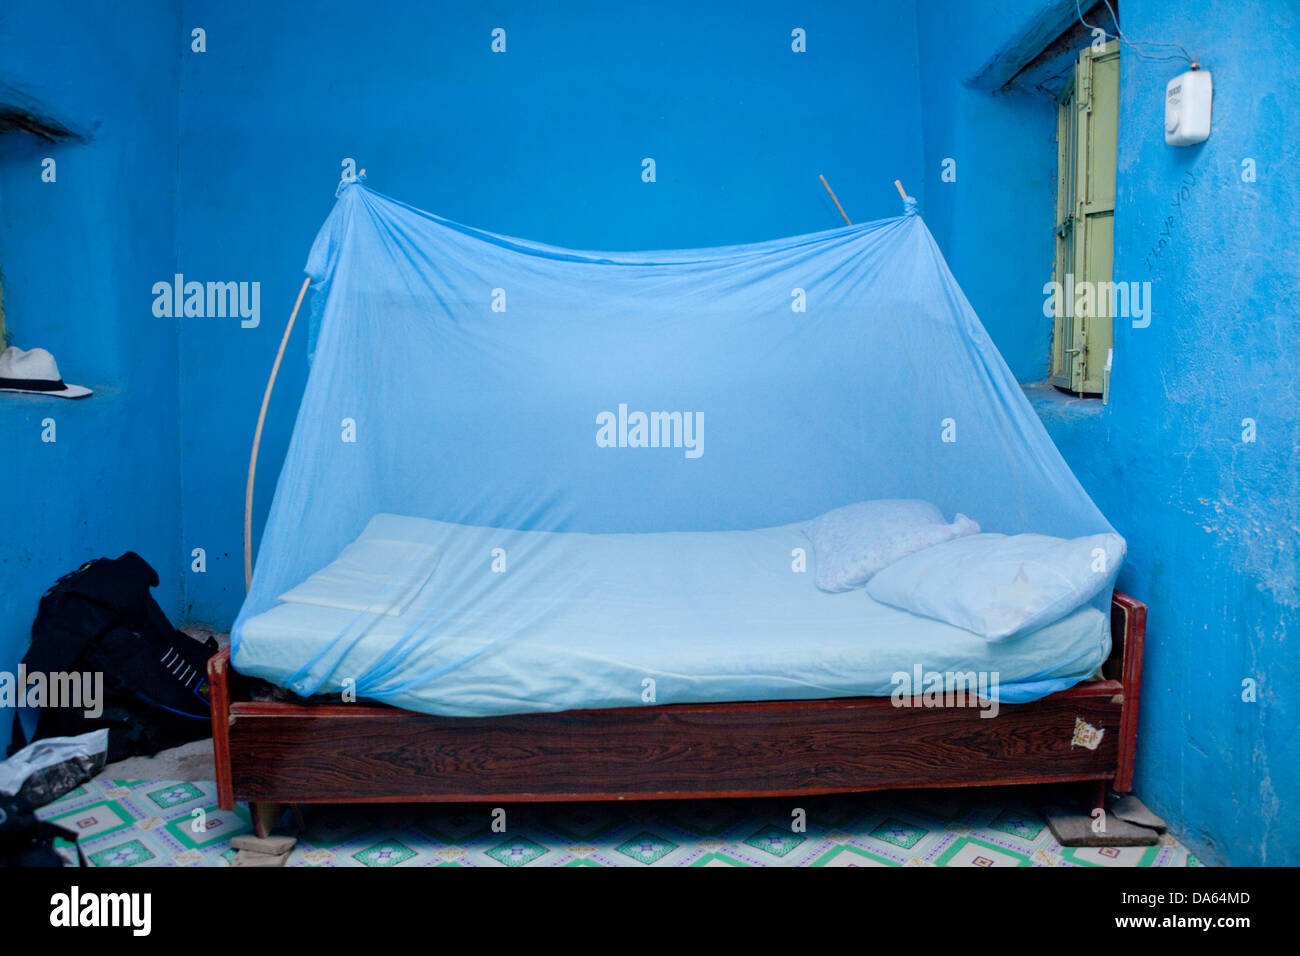 Hotel, Asaita, Africa, bed, mosquito net, mosquito net, primitive, hotel, Ethiopia, Stock Photo